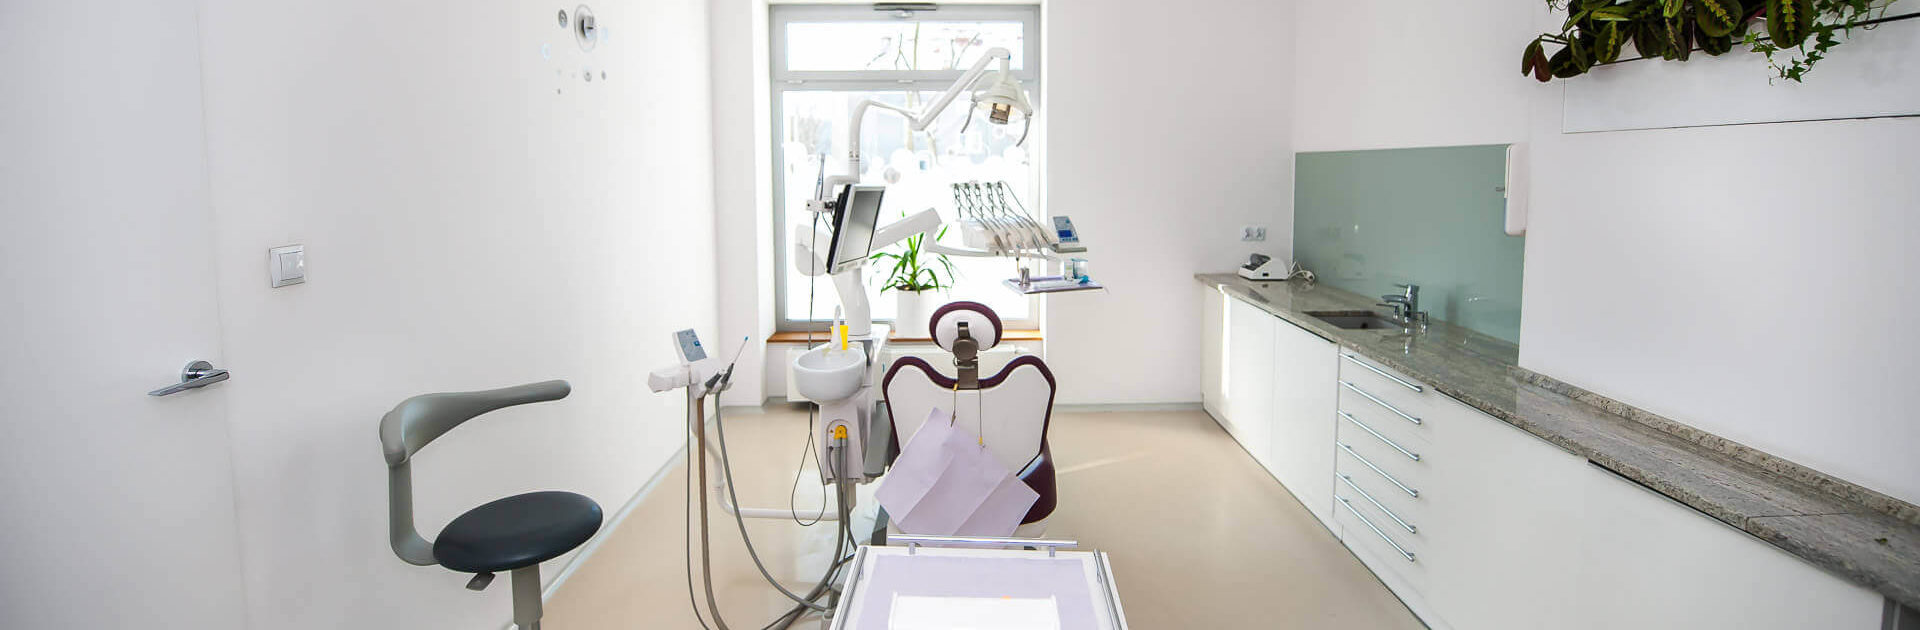 Dentysta | Stomatolog Gdynia | Artdentico